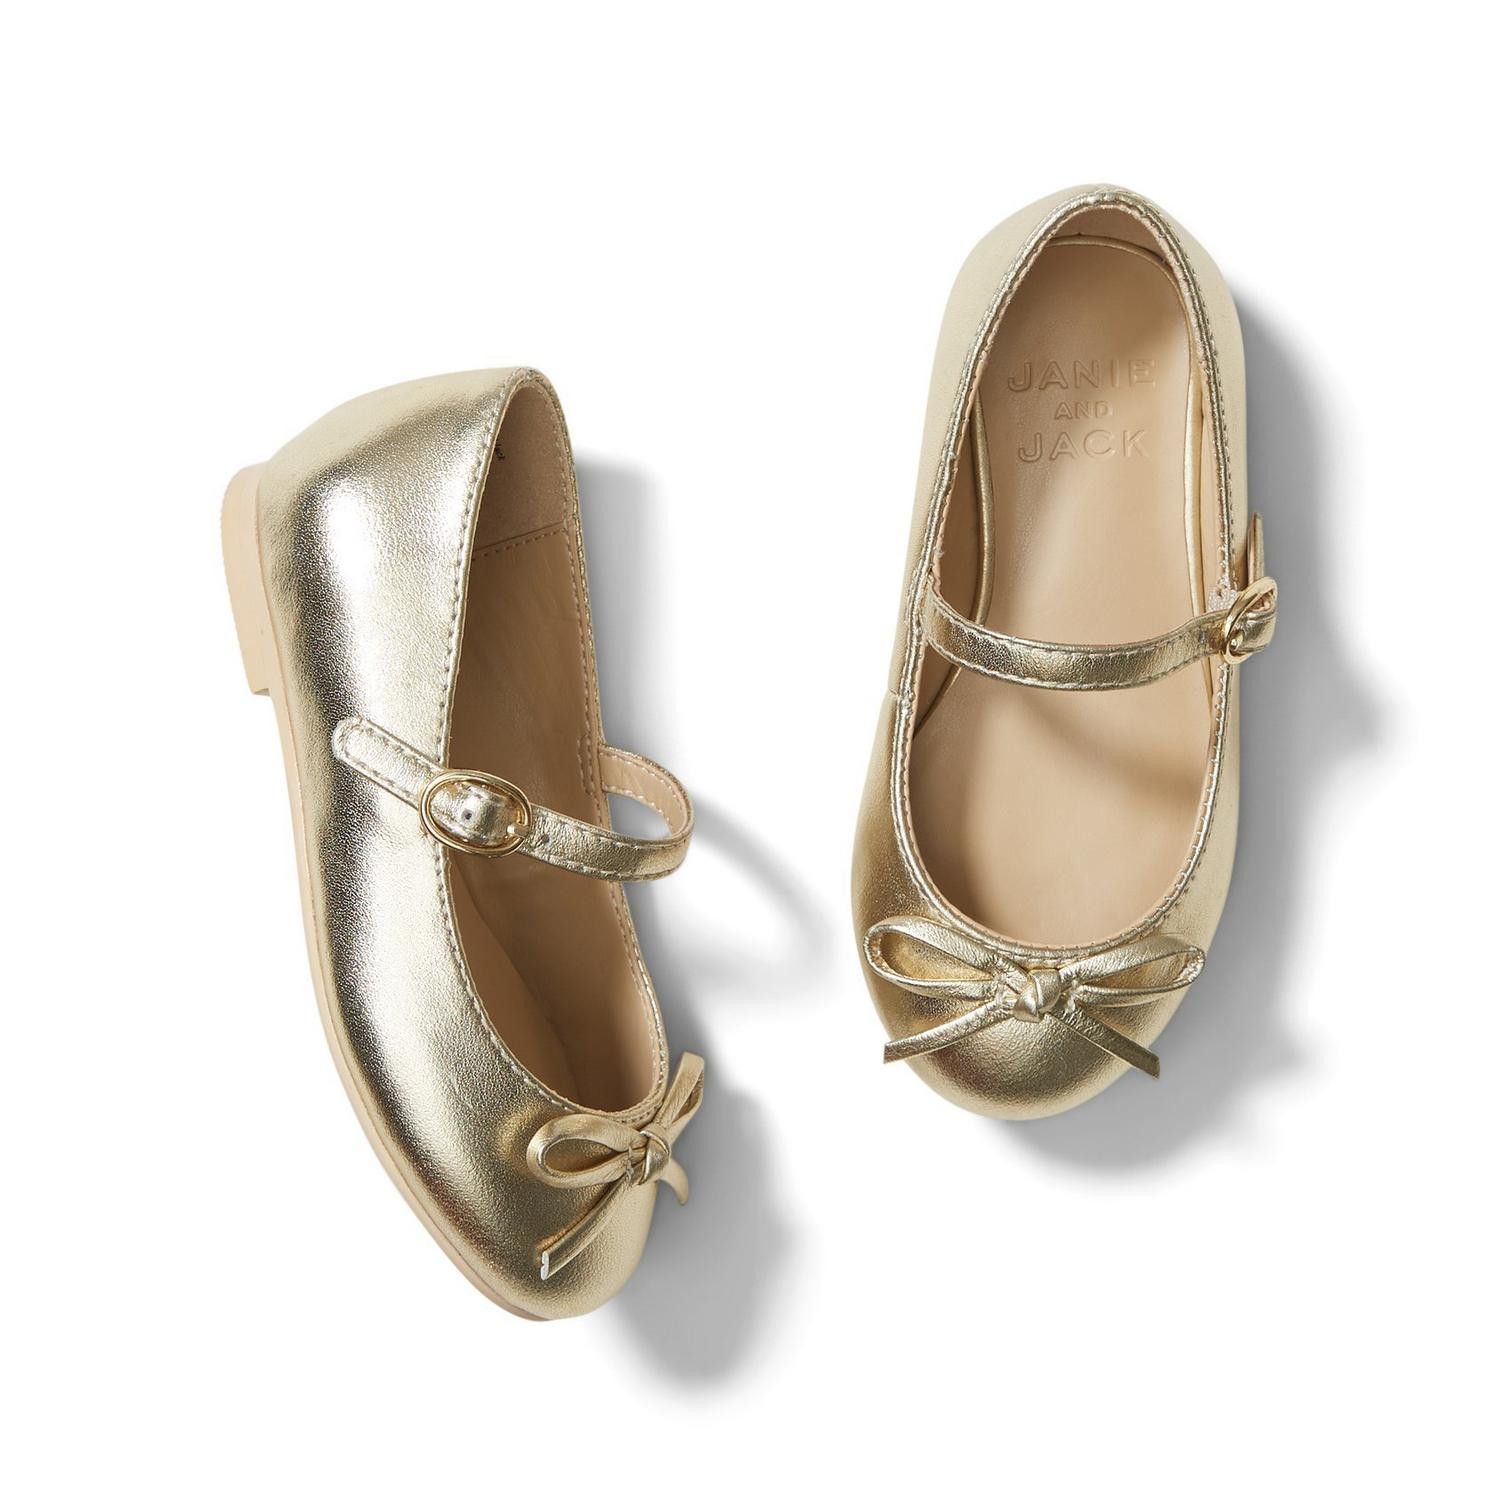 Metallic Bow Ballet Flat | Girls Shoes | Girls Christmas Shoes #LTKshoecrush #LTKgirls #LTKparties | Janie and Jack